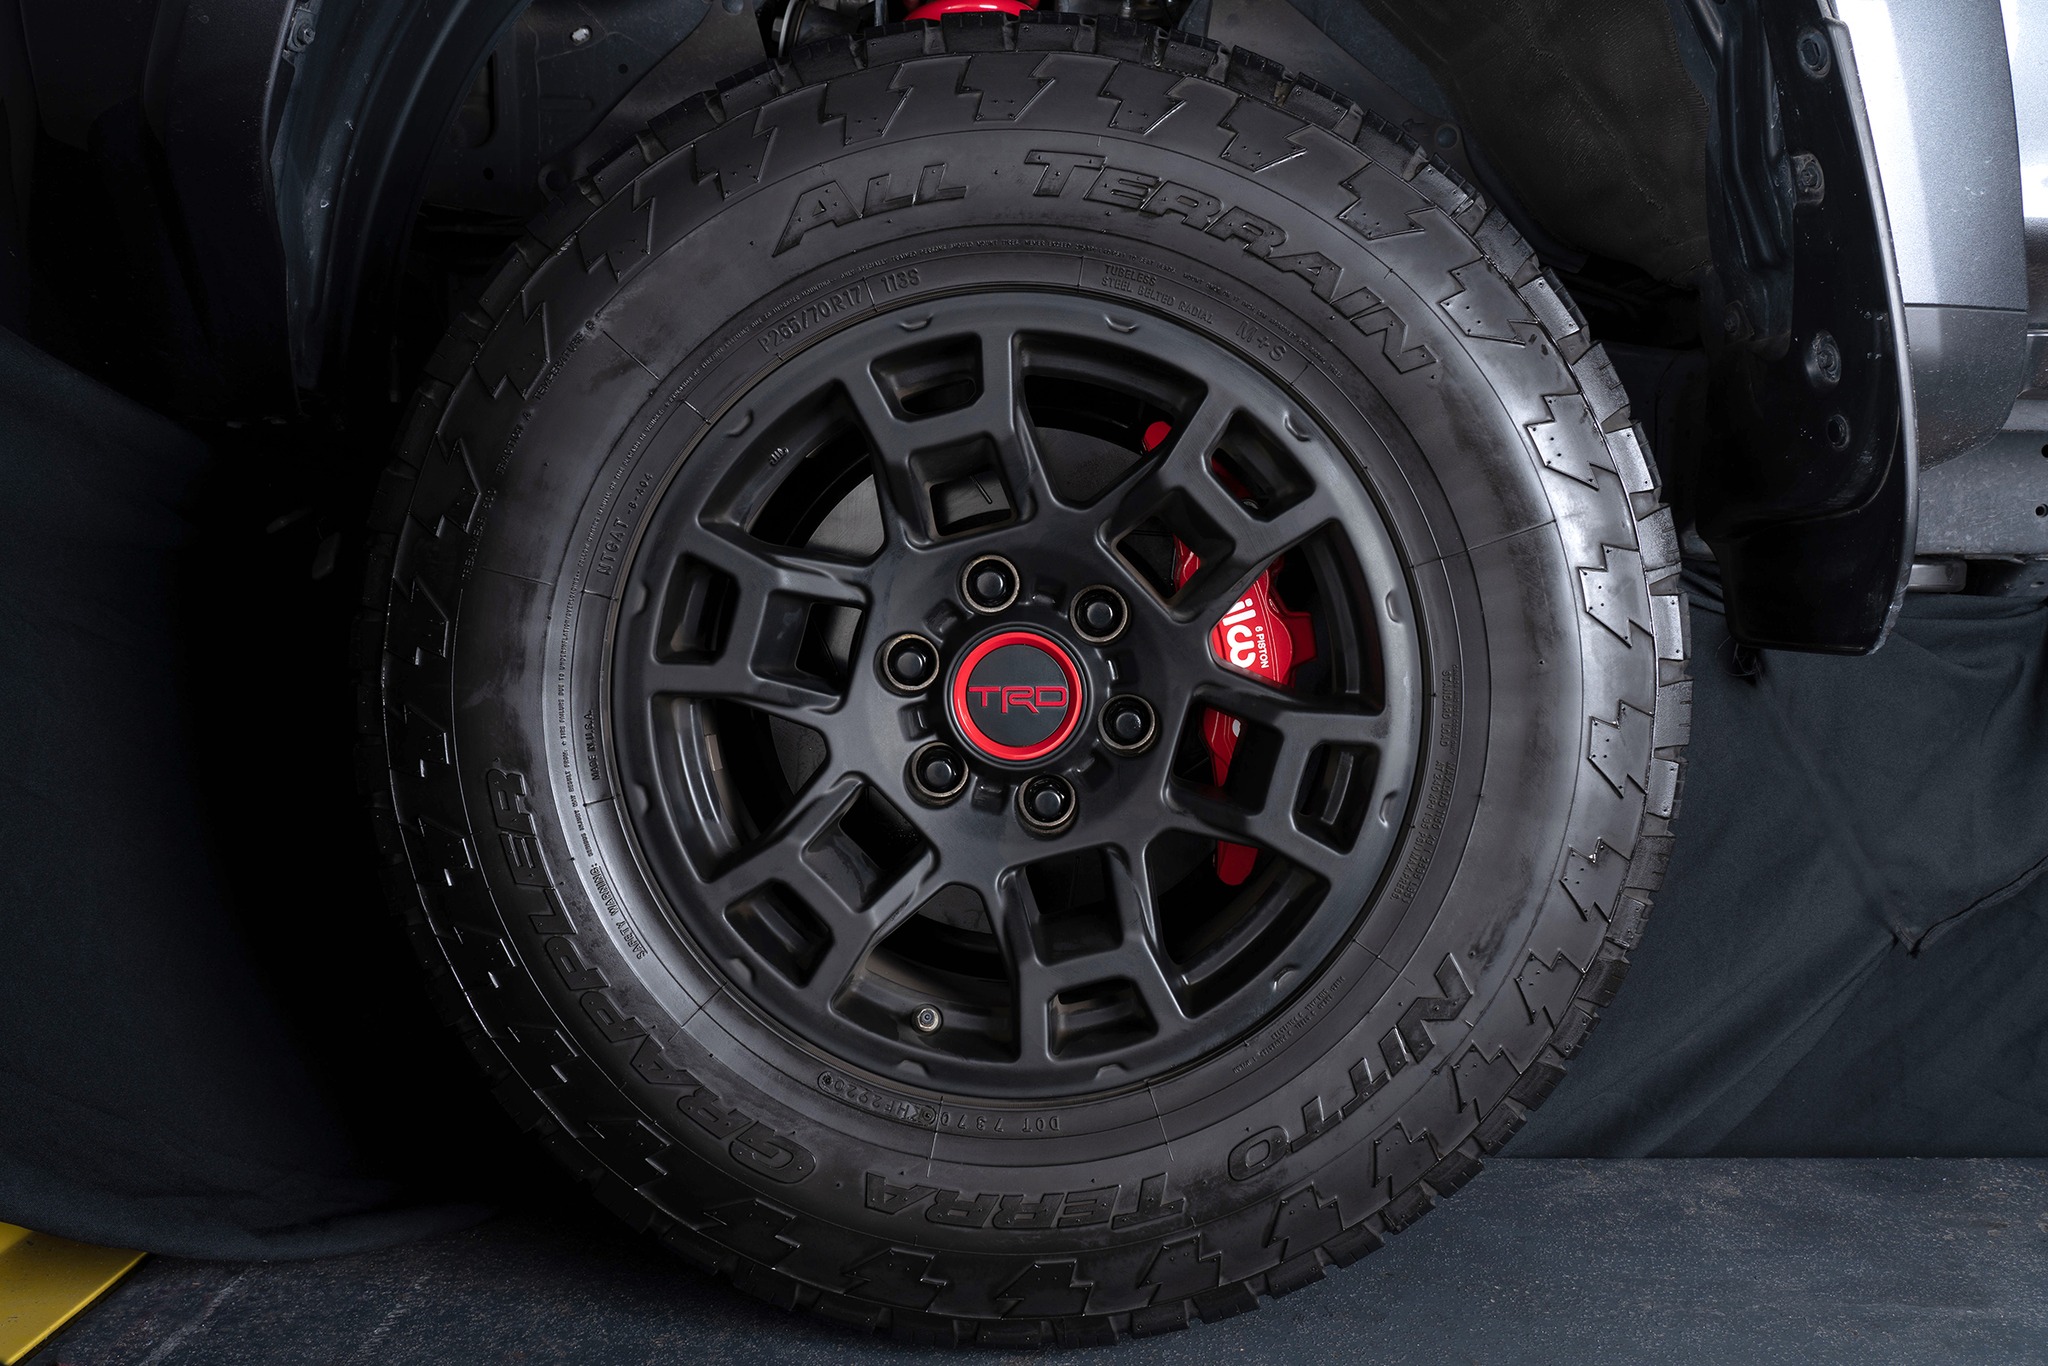 Wilwood Disc Brakes Releases Aero6-DM Direct-Mount Brake Kits for Toyota Tacoma